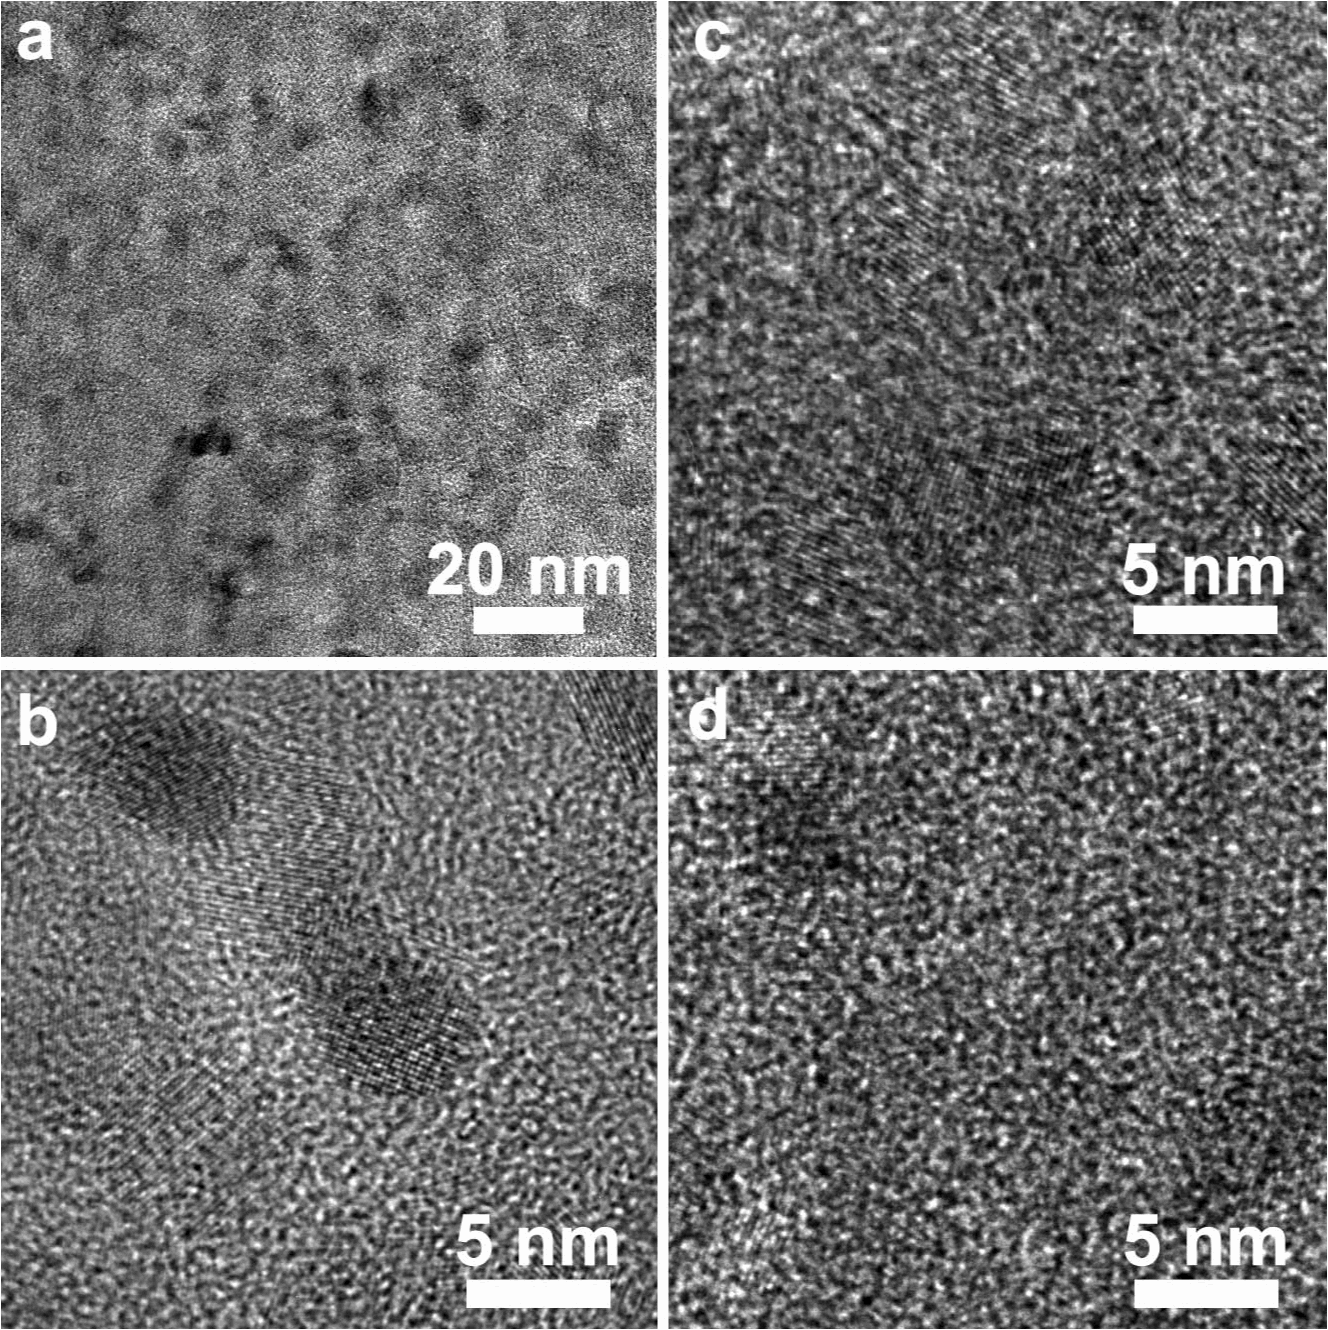 Four micrographs, one at 20 nanometers and three at 5 nanometers.